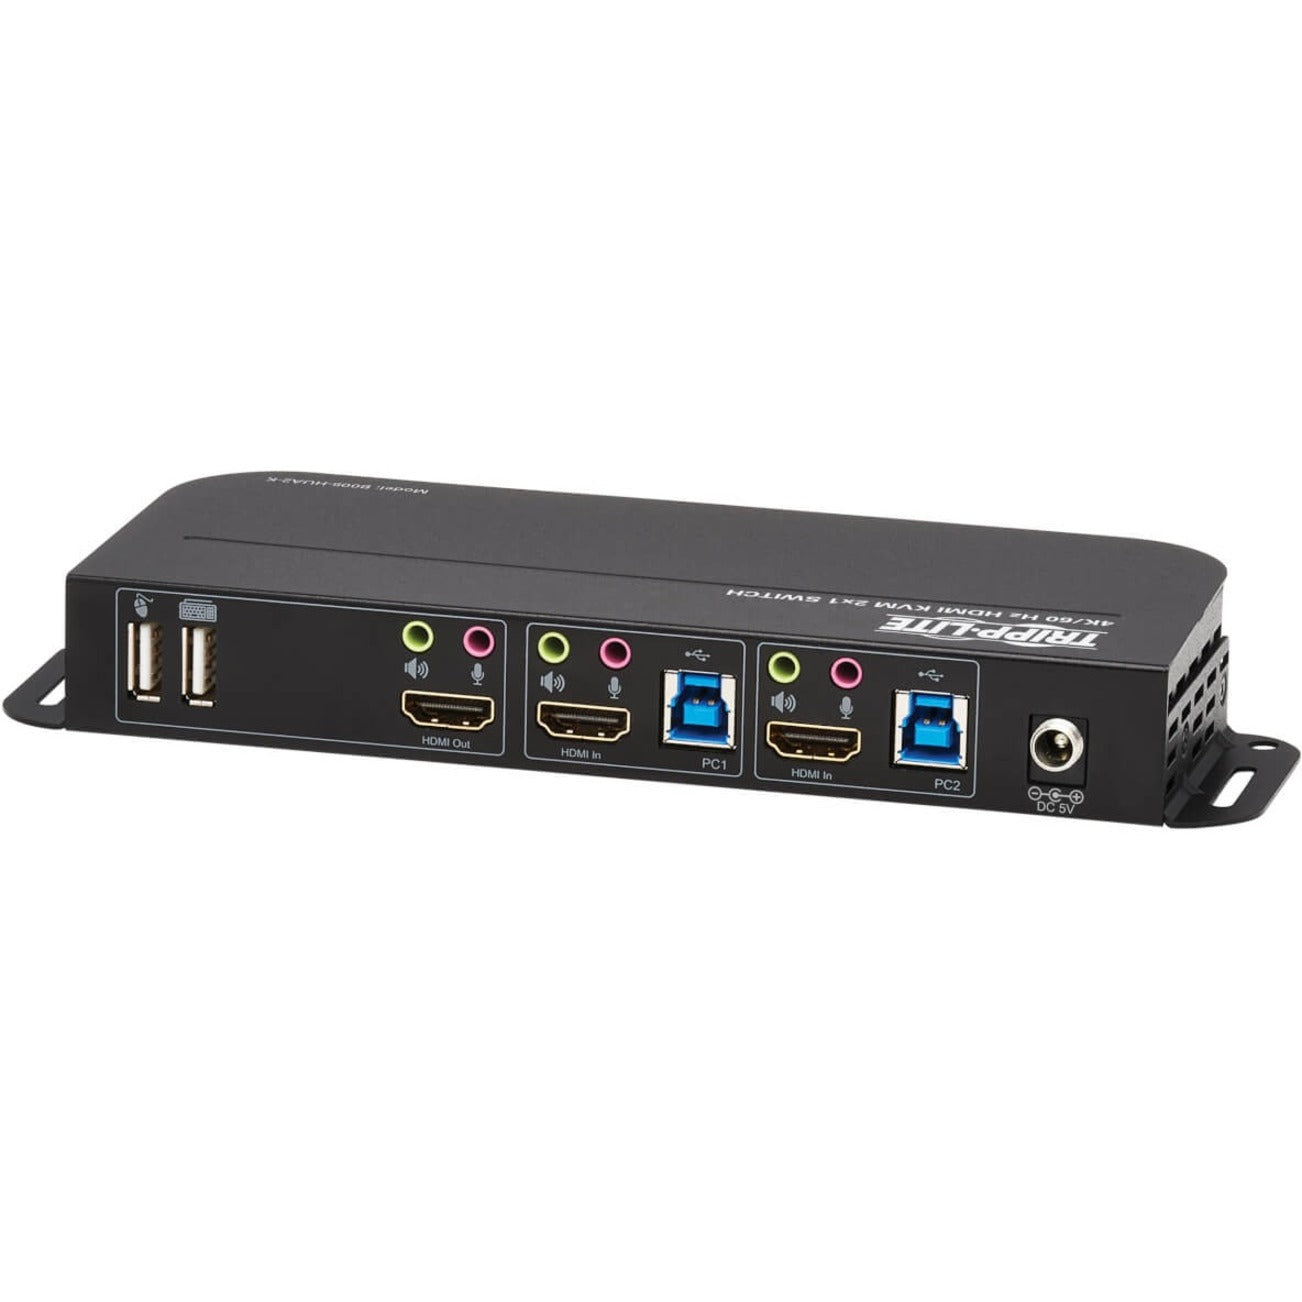 Tripp Lite B005-HUA2-K 2-Port HDMI/USB KVM Switch, 4096 x 2160 Resolution, 3-Year Warranty